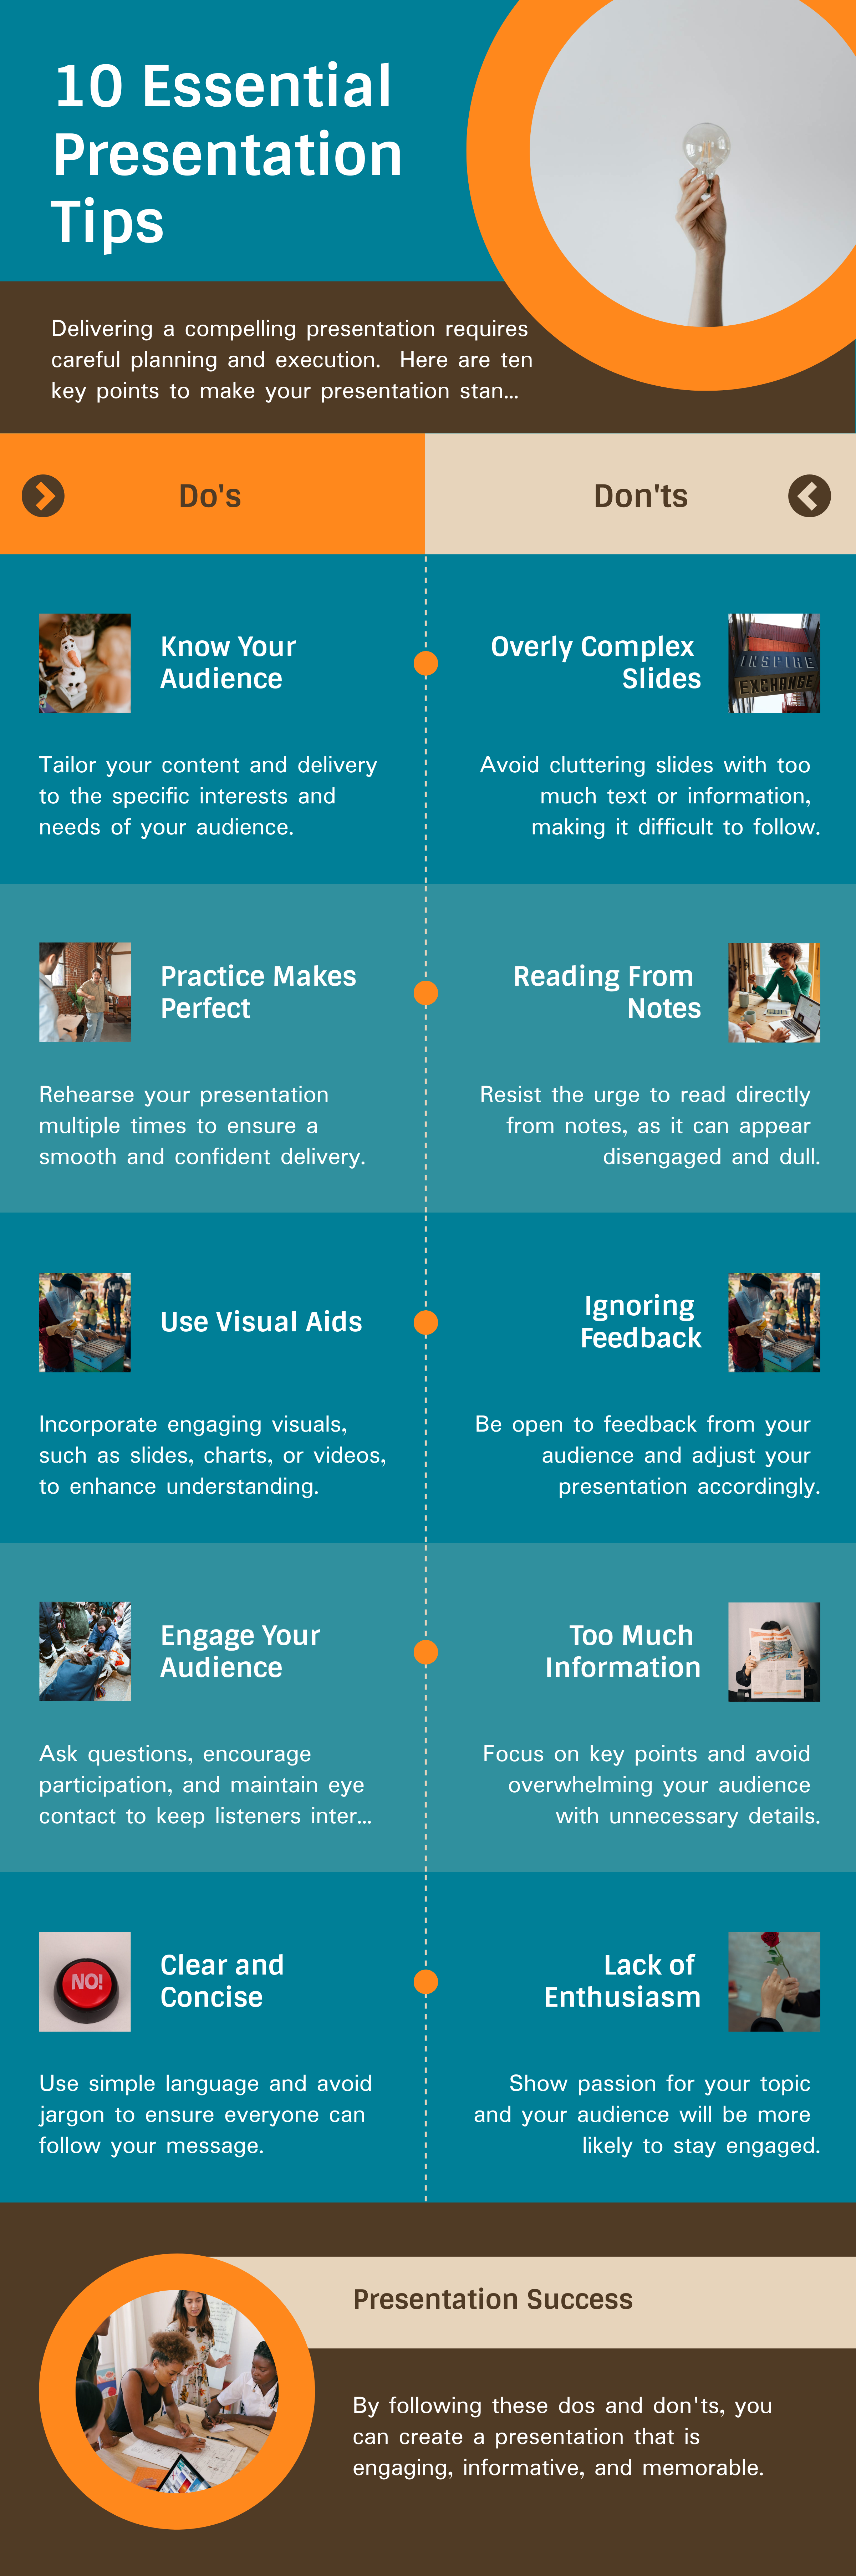 10 Essential Presentation Tips